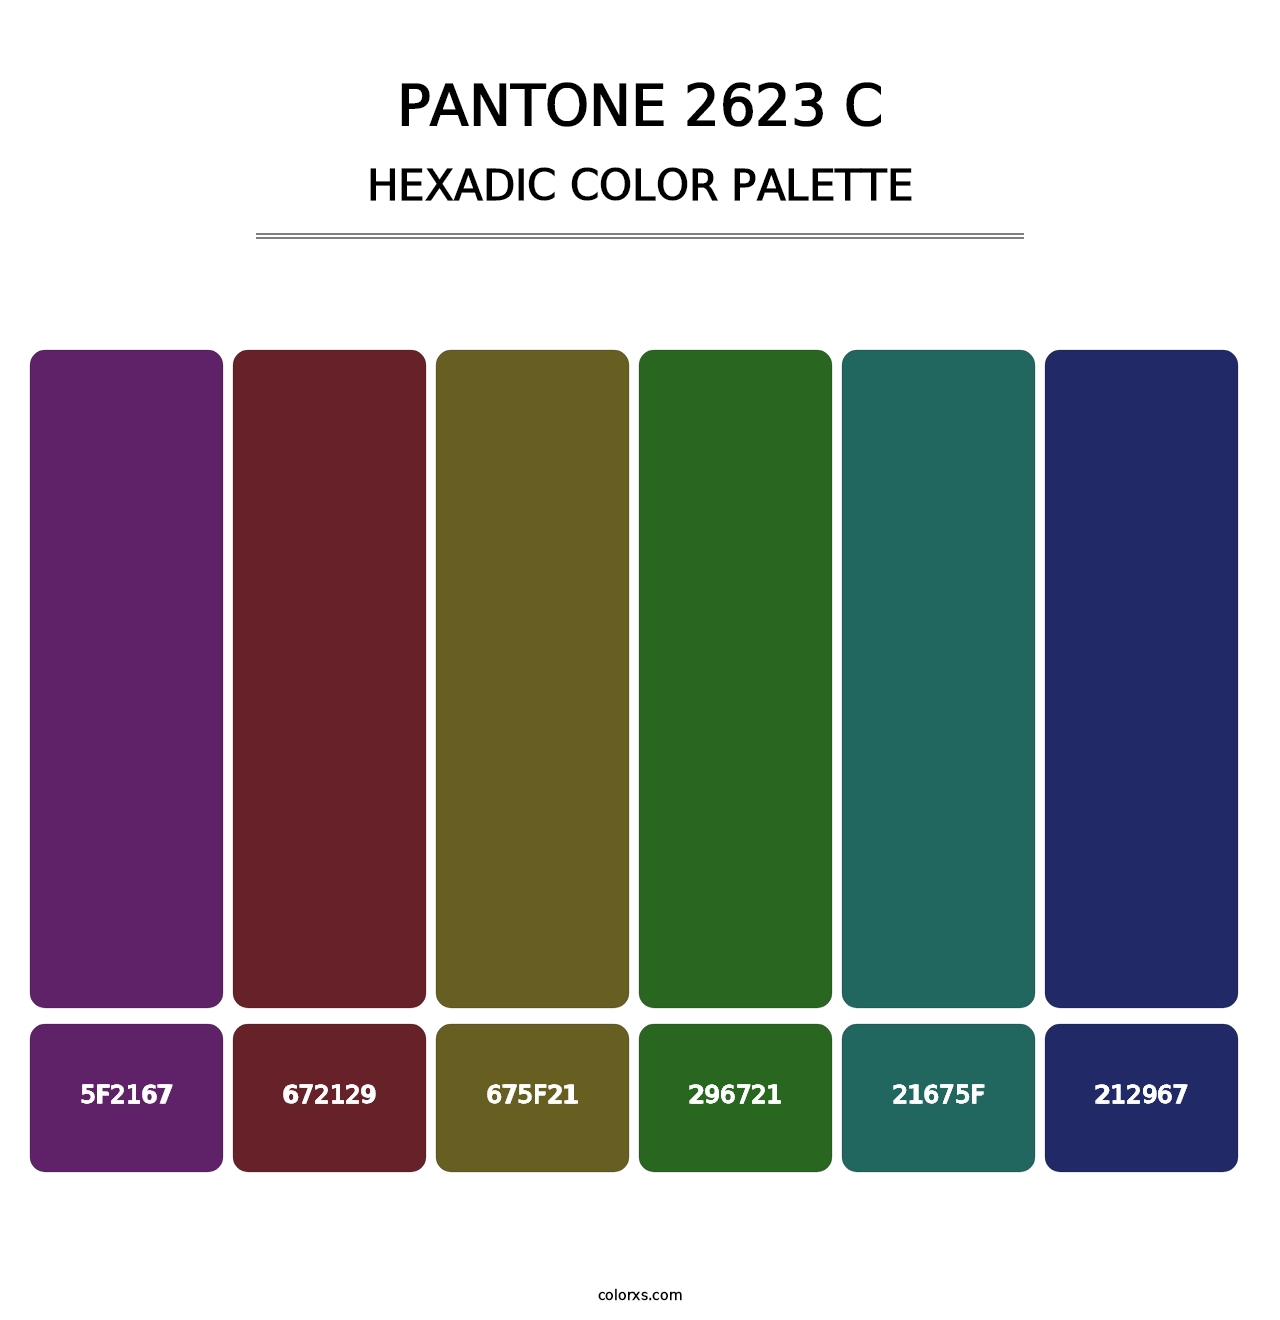 PANTONE 2623 C - Hexadic Color Palette